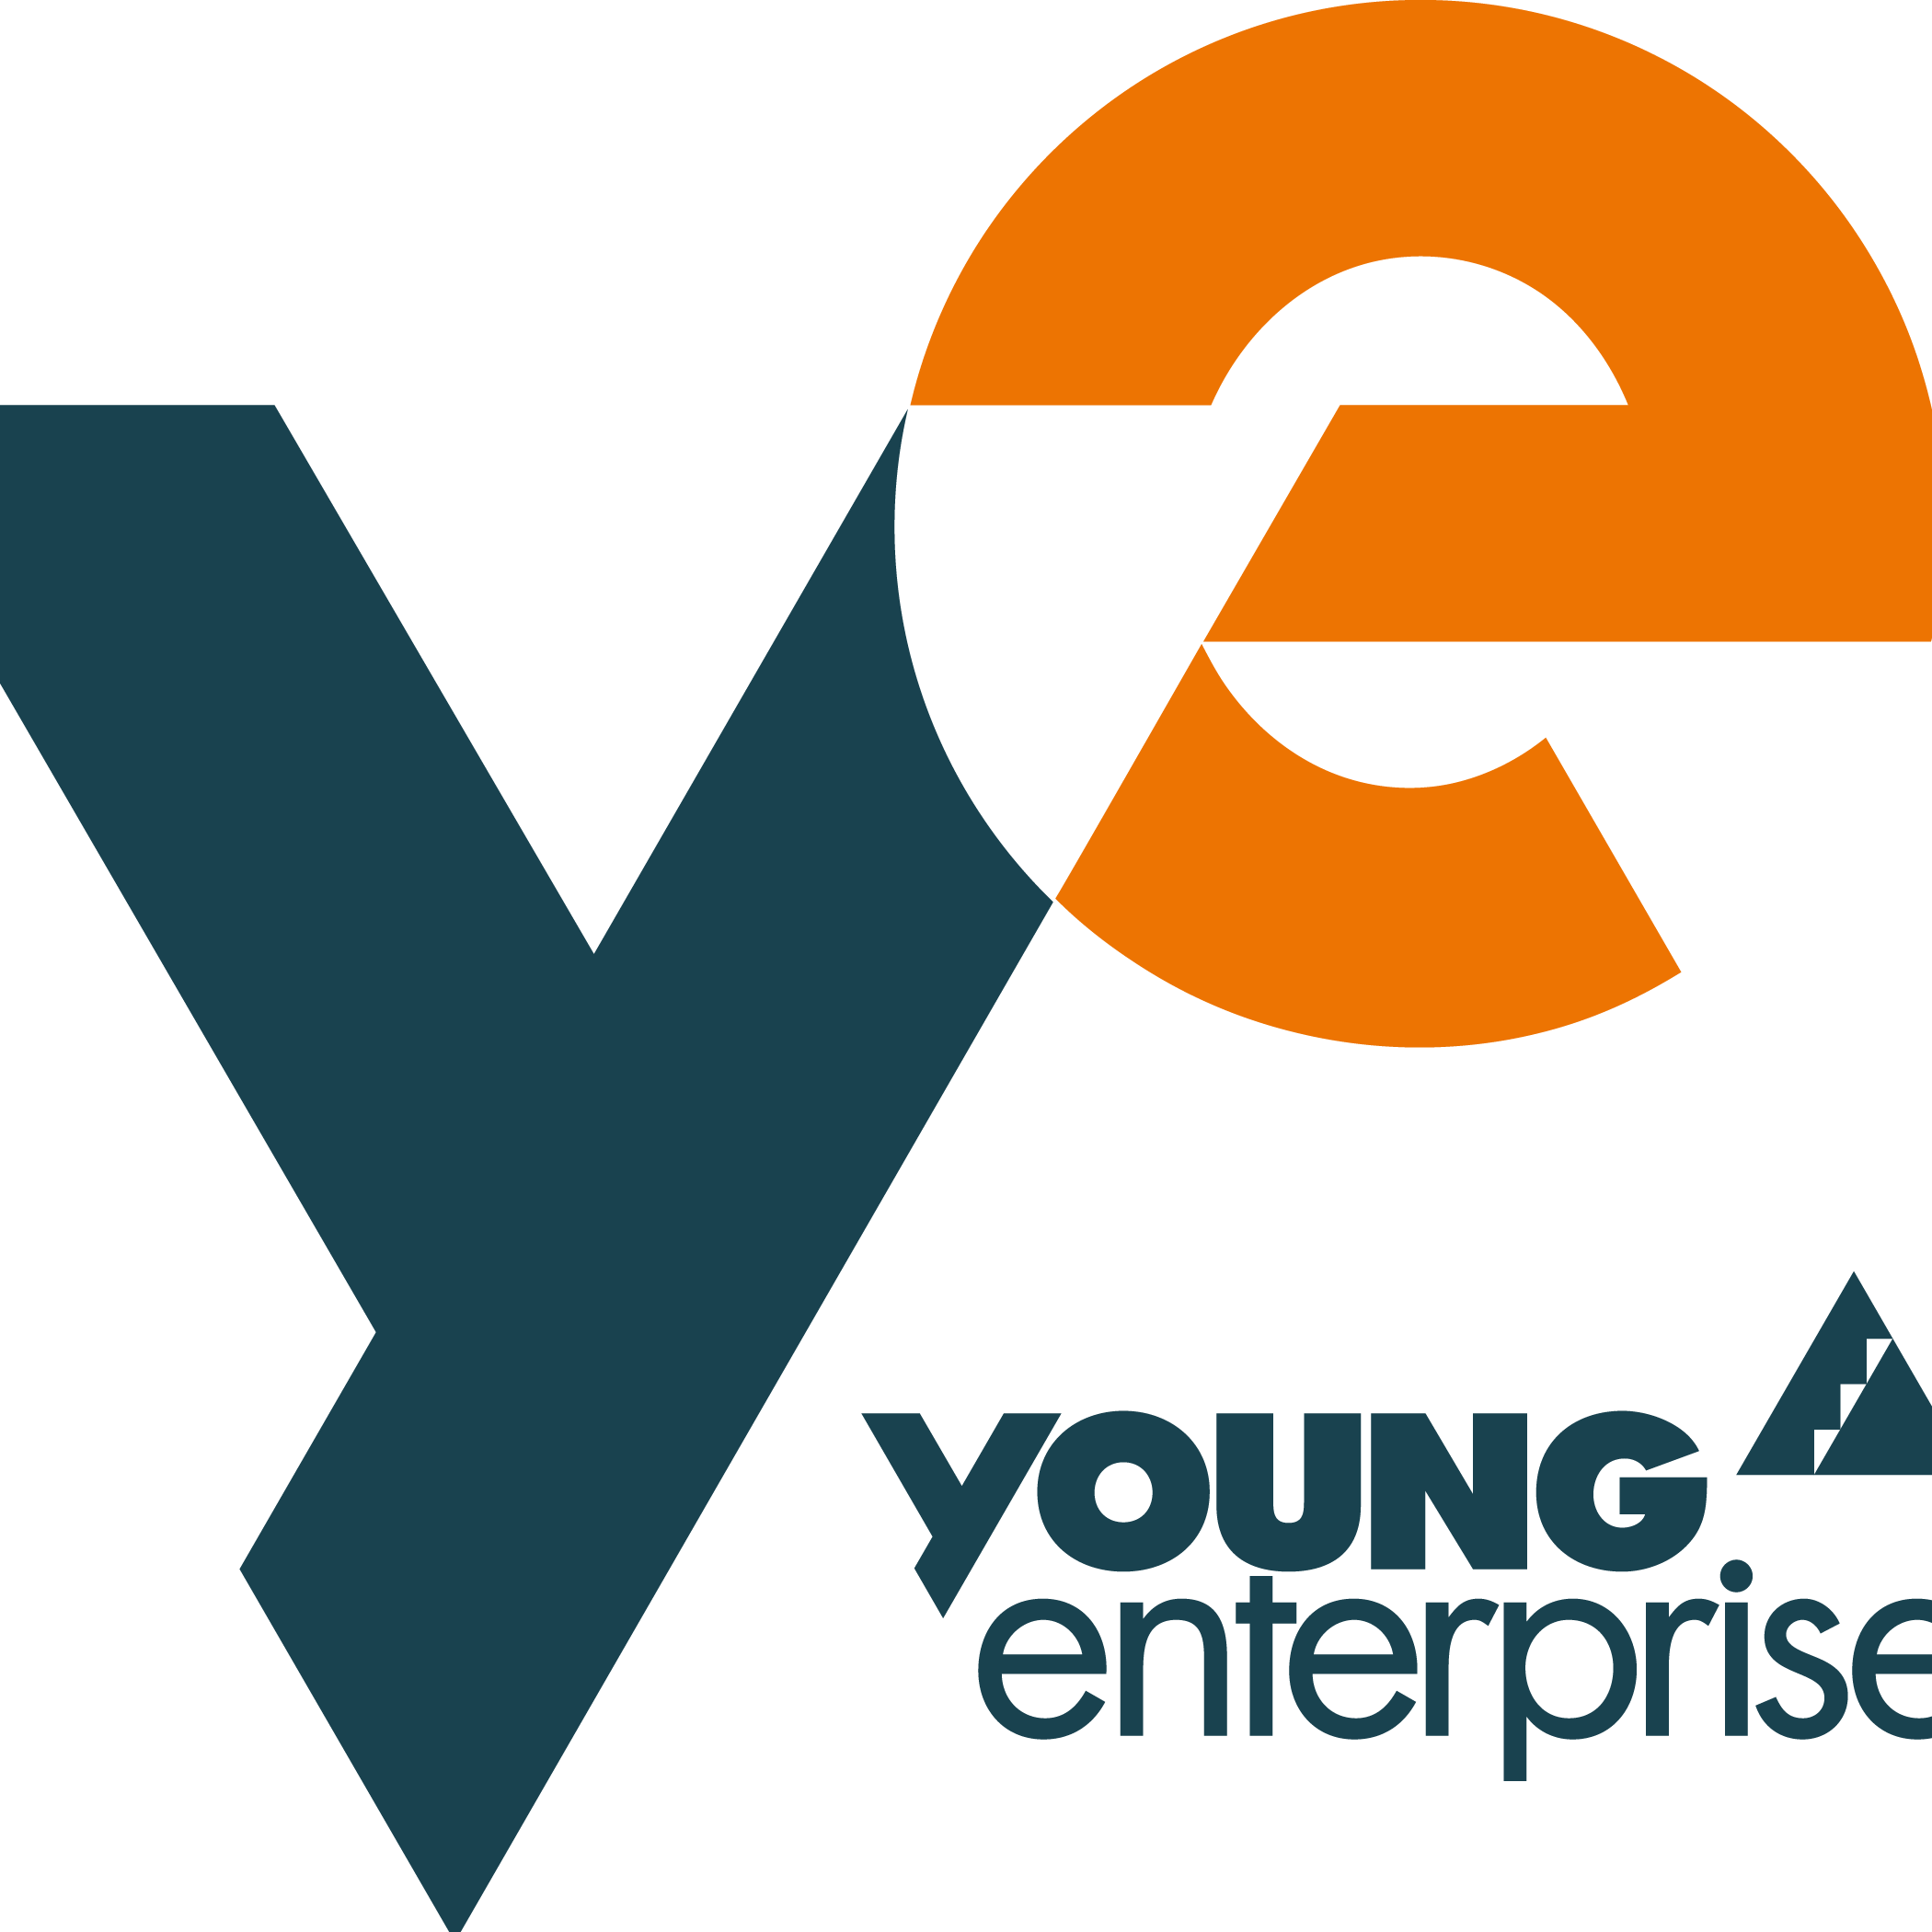 Young Enterprise Nw - Young Enterprise Scotland (2100x2100), Png Download